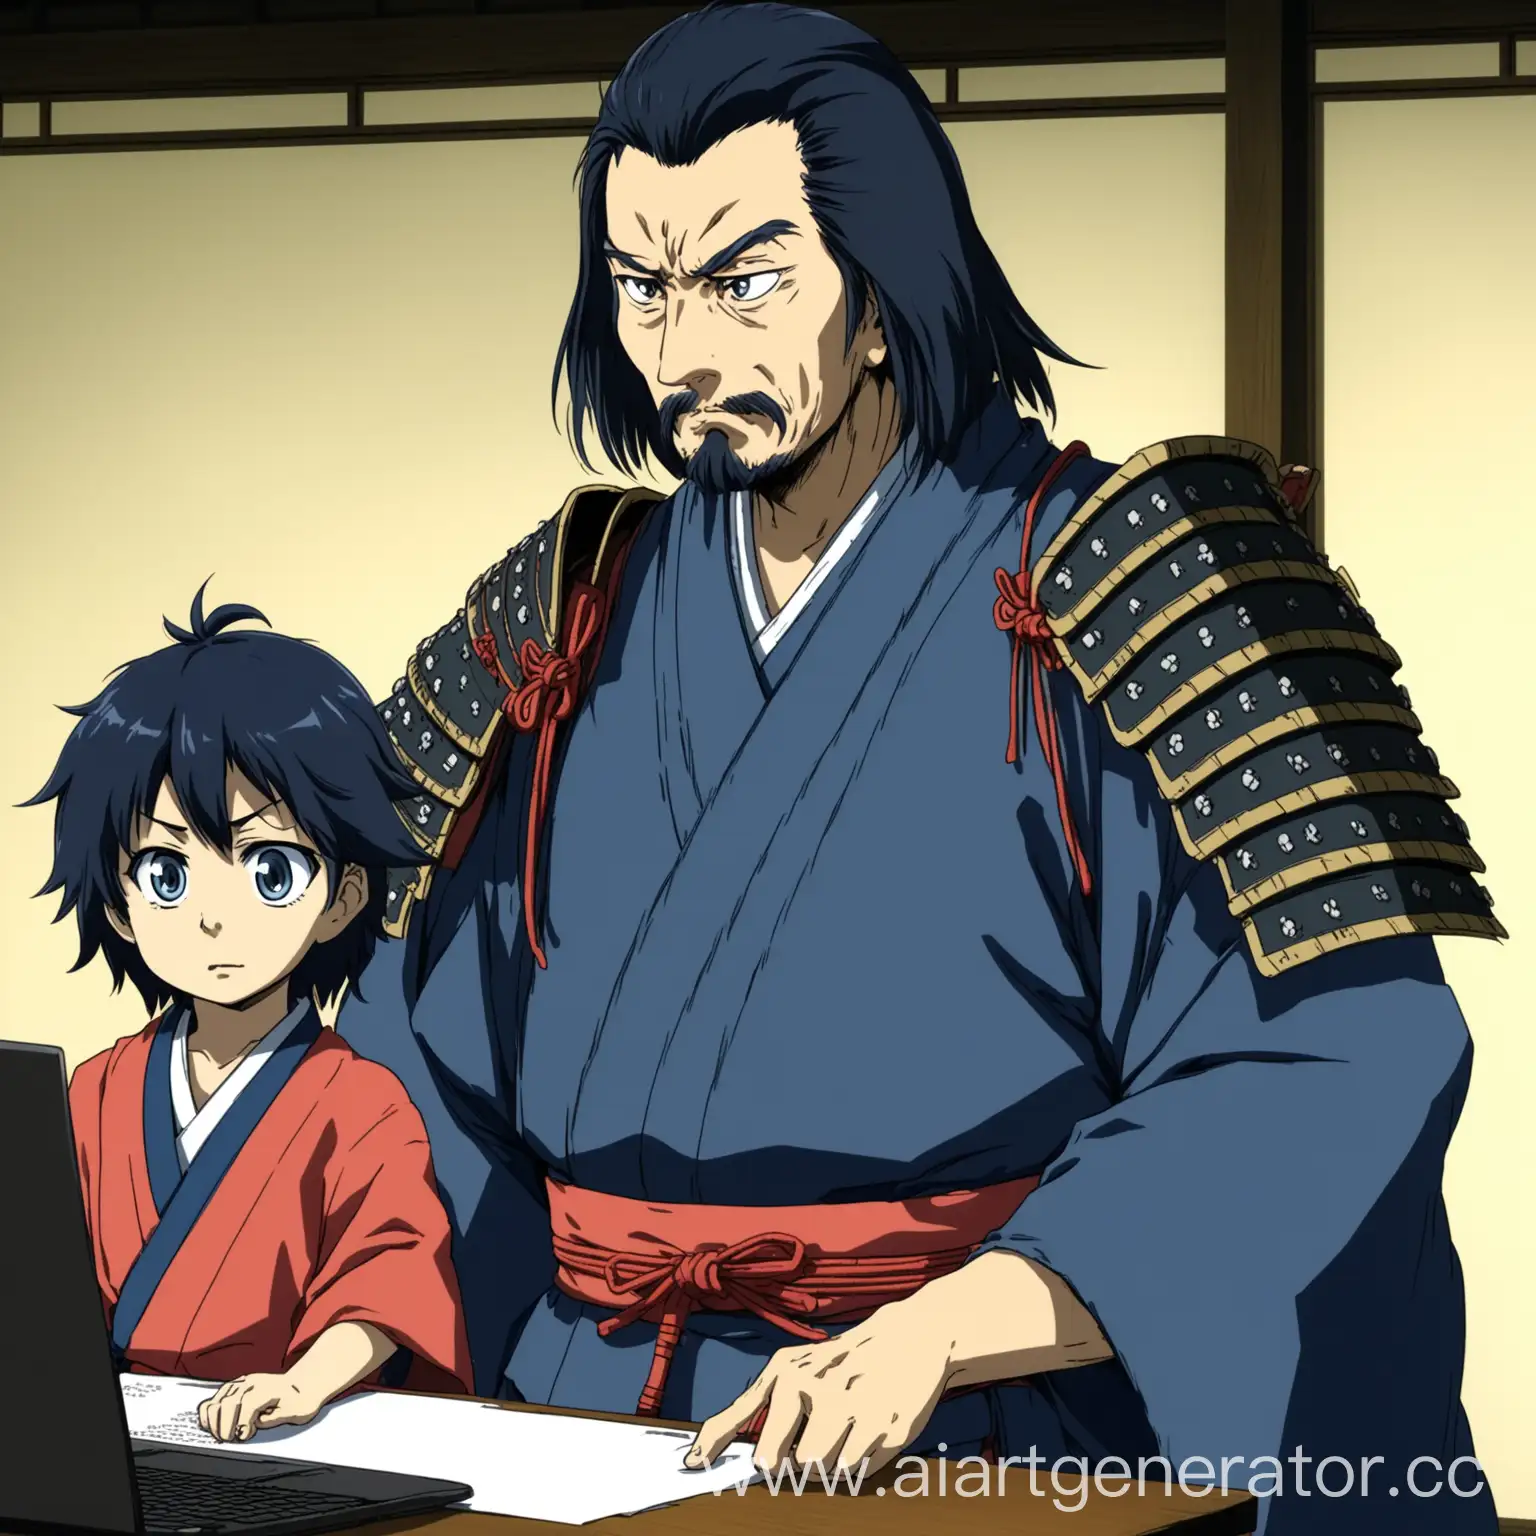 Anime-Samurai-Training-Old-Samurai-Teaches-Young-Samurai-Typescript-Programming